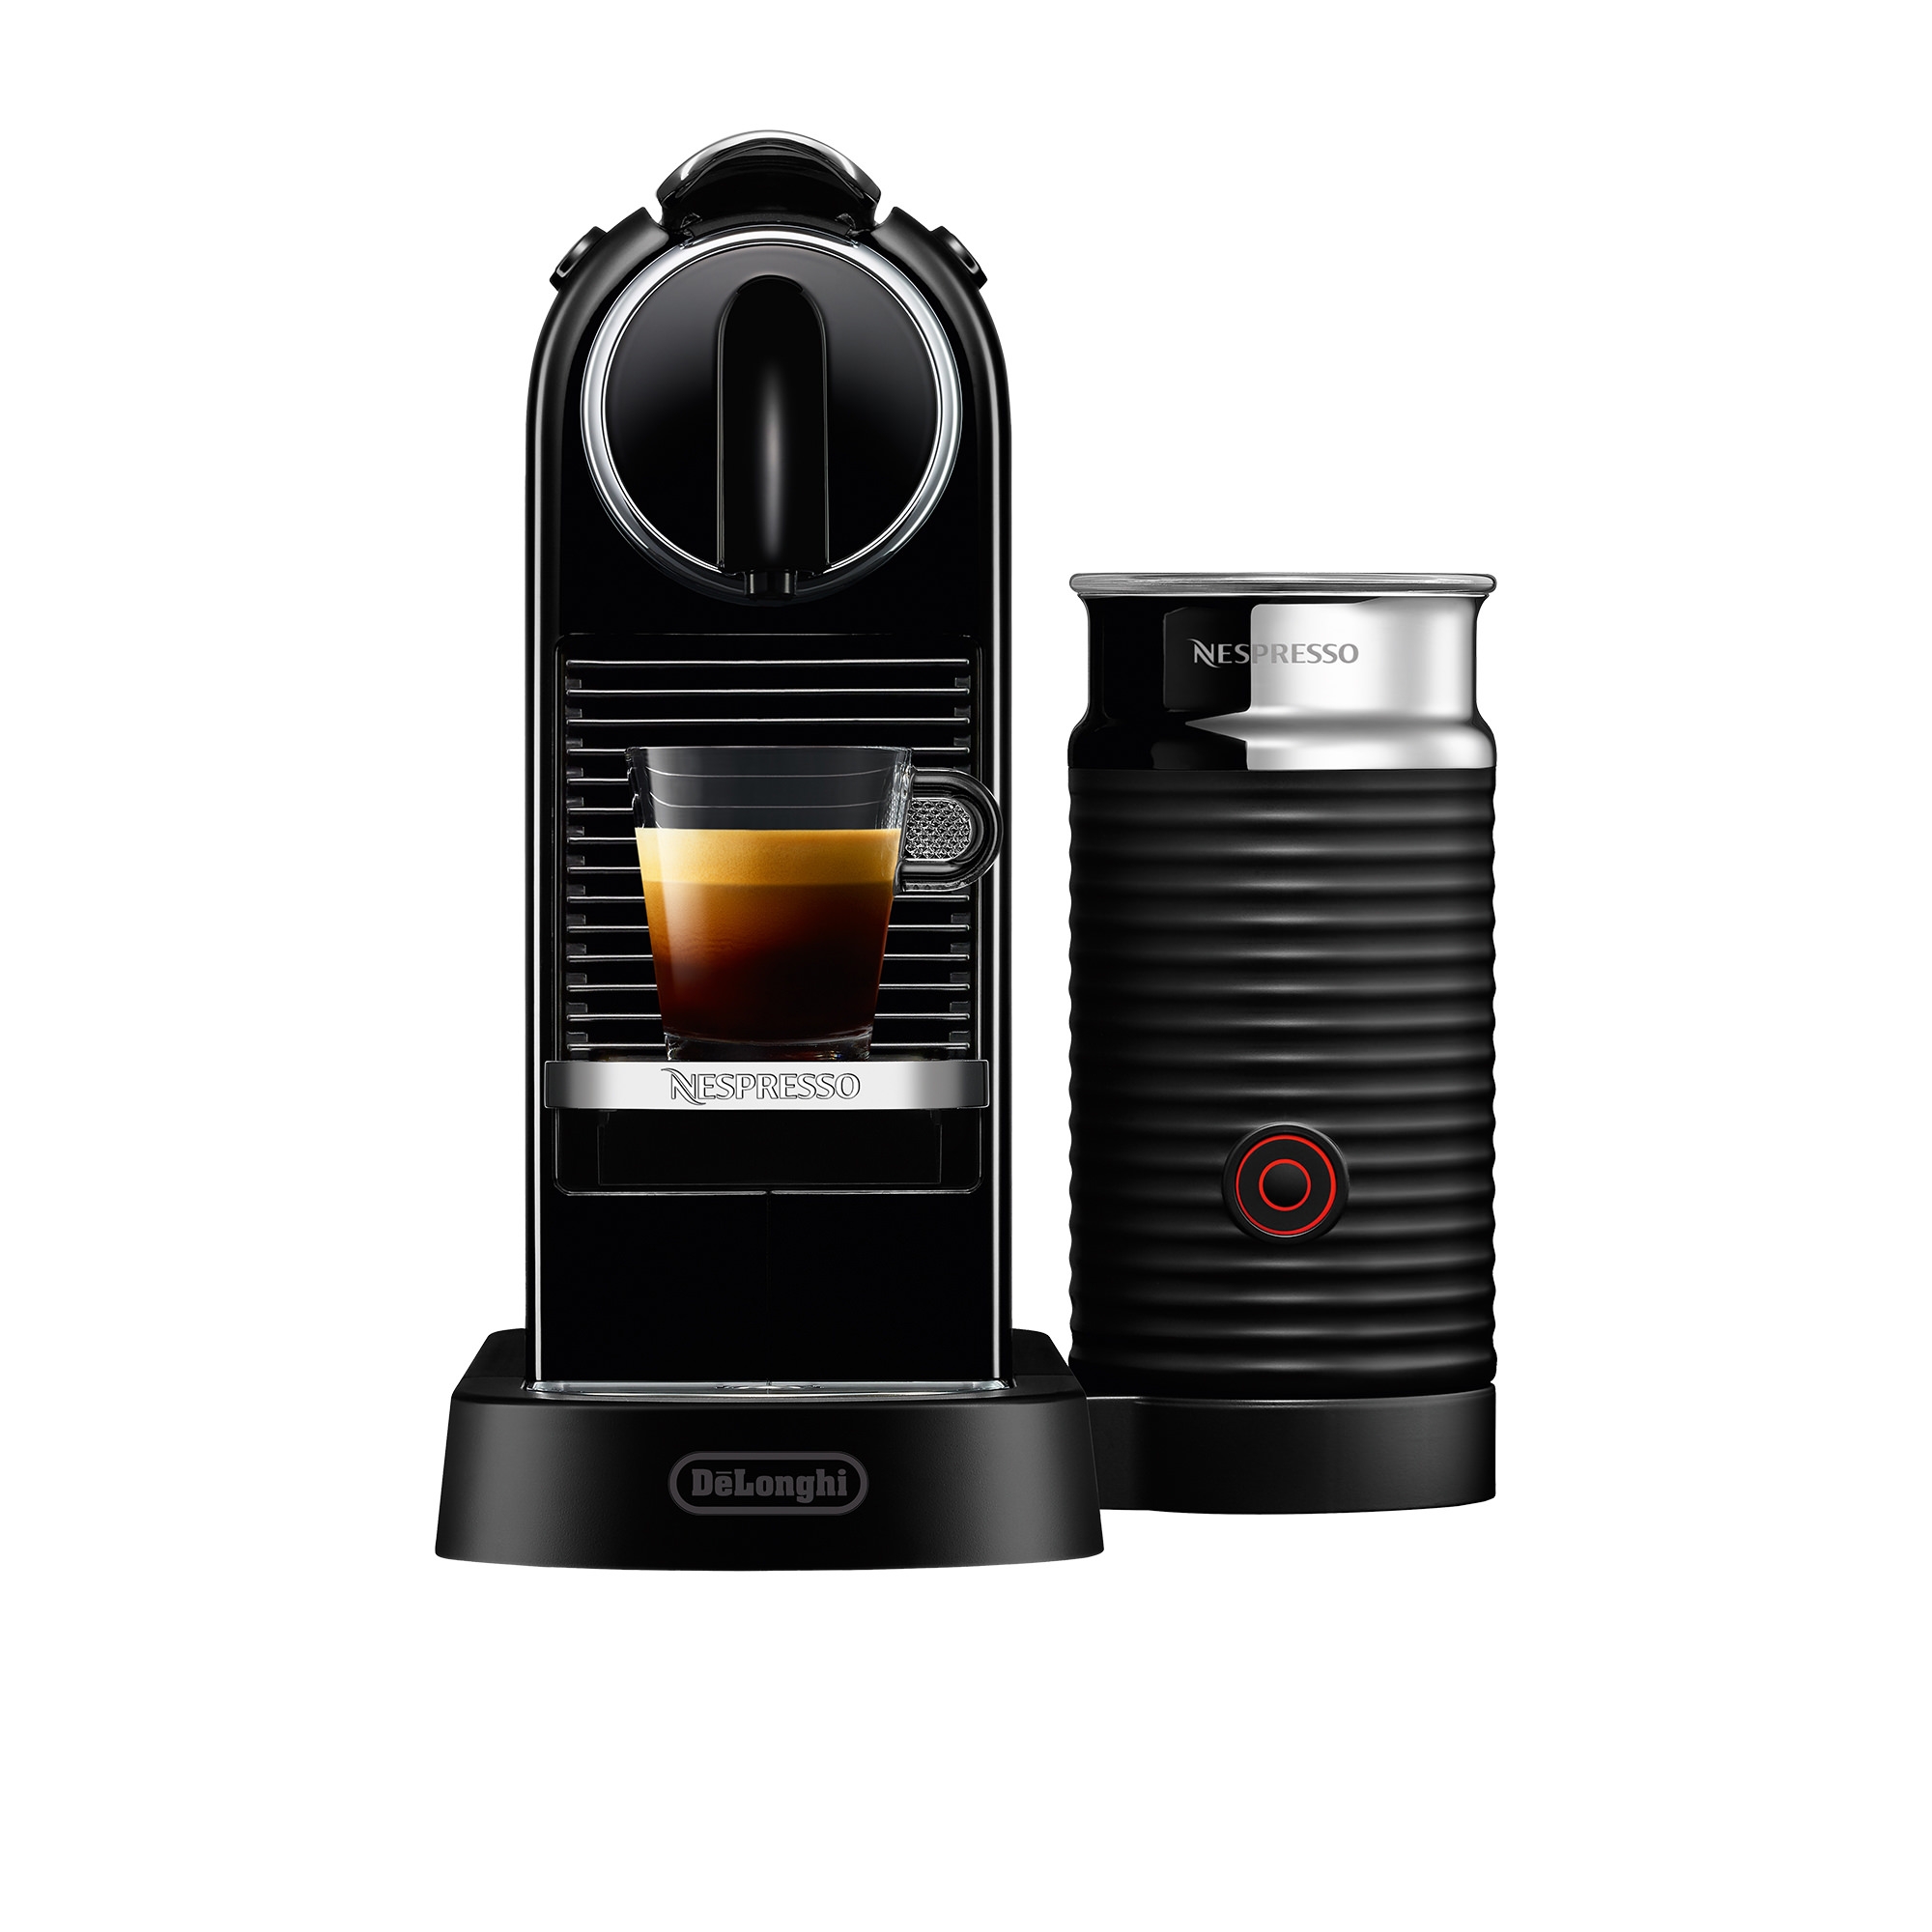 DeLonghi Nespresso Citiz EN267BAE Coffee Machine with Milk Frother Black Image 1